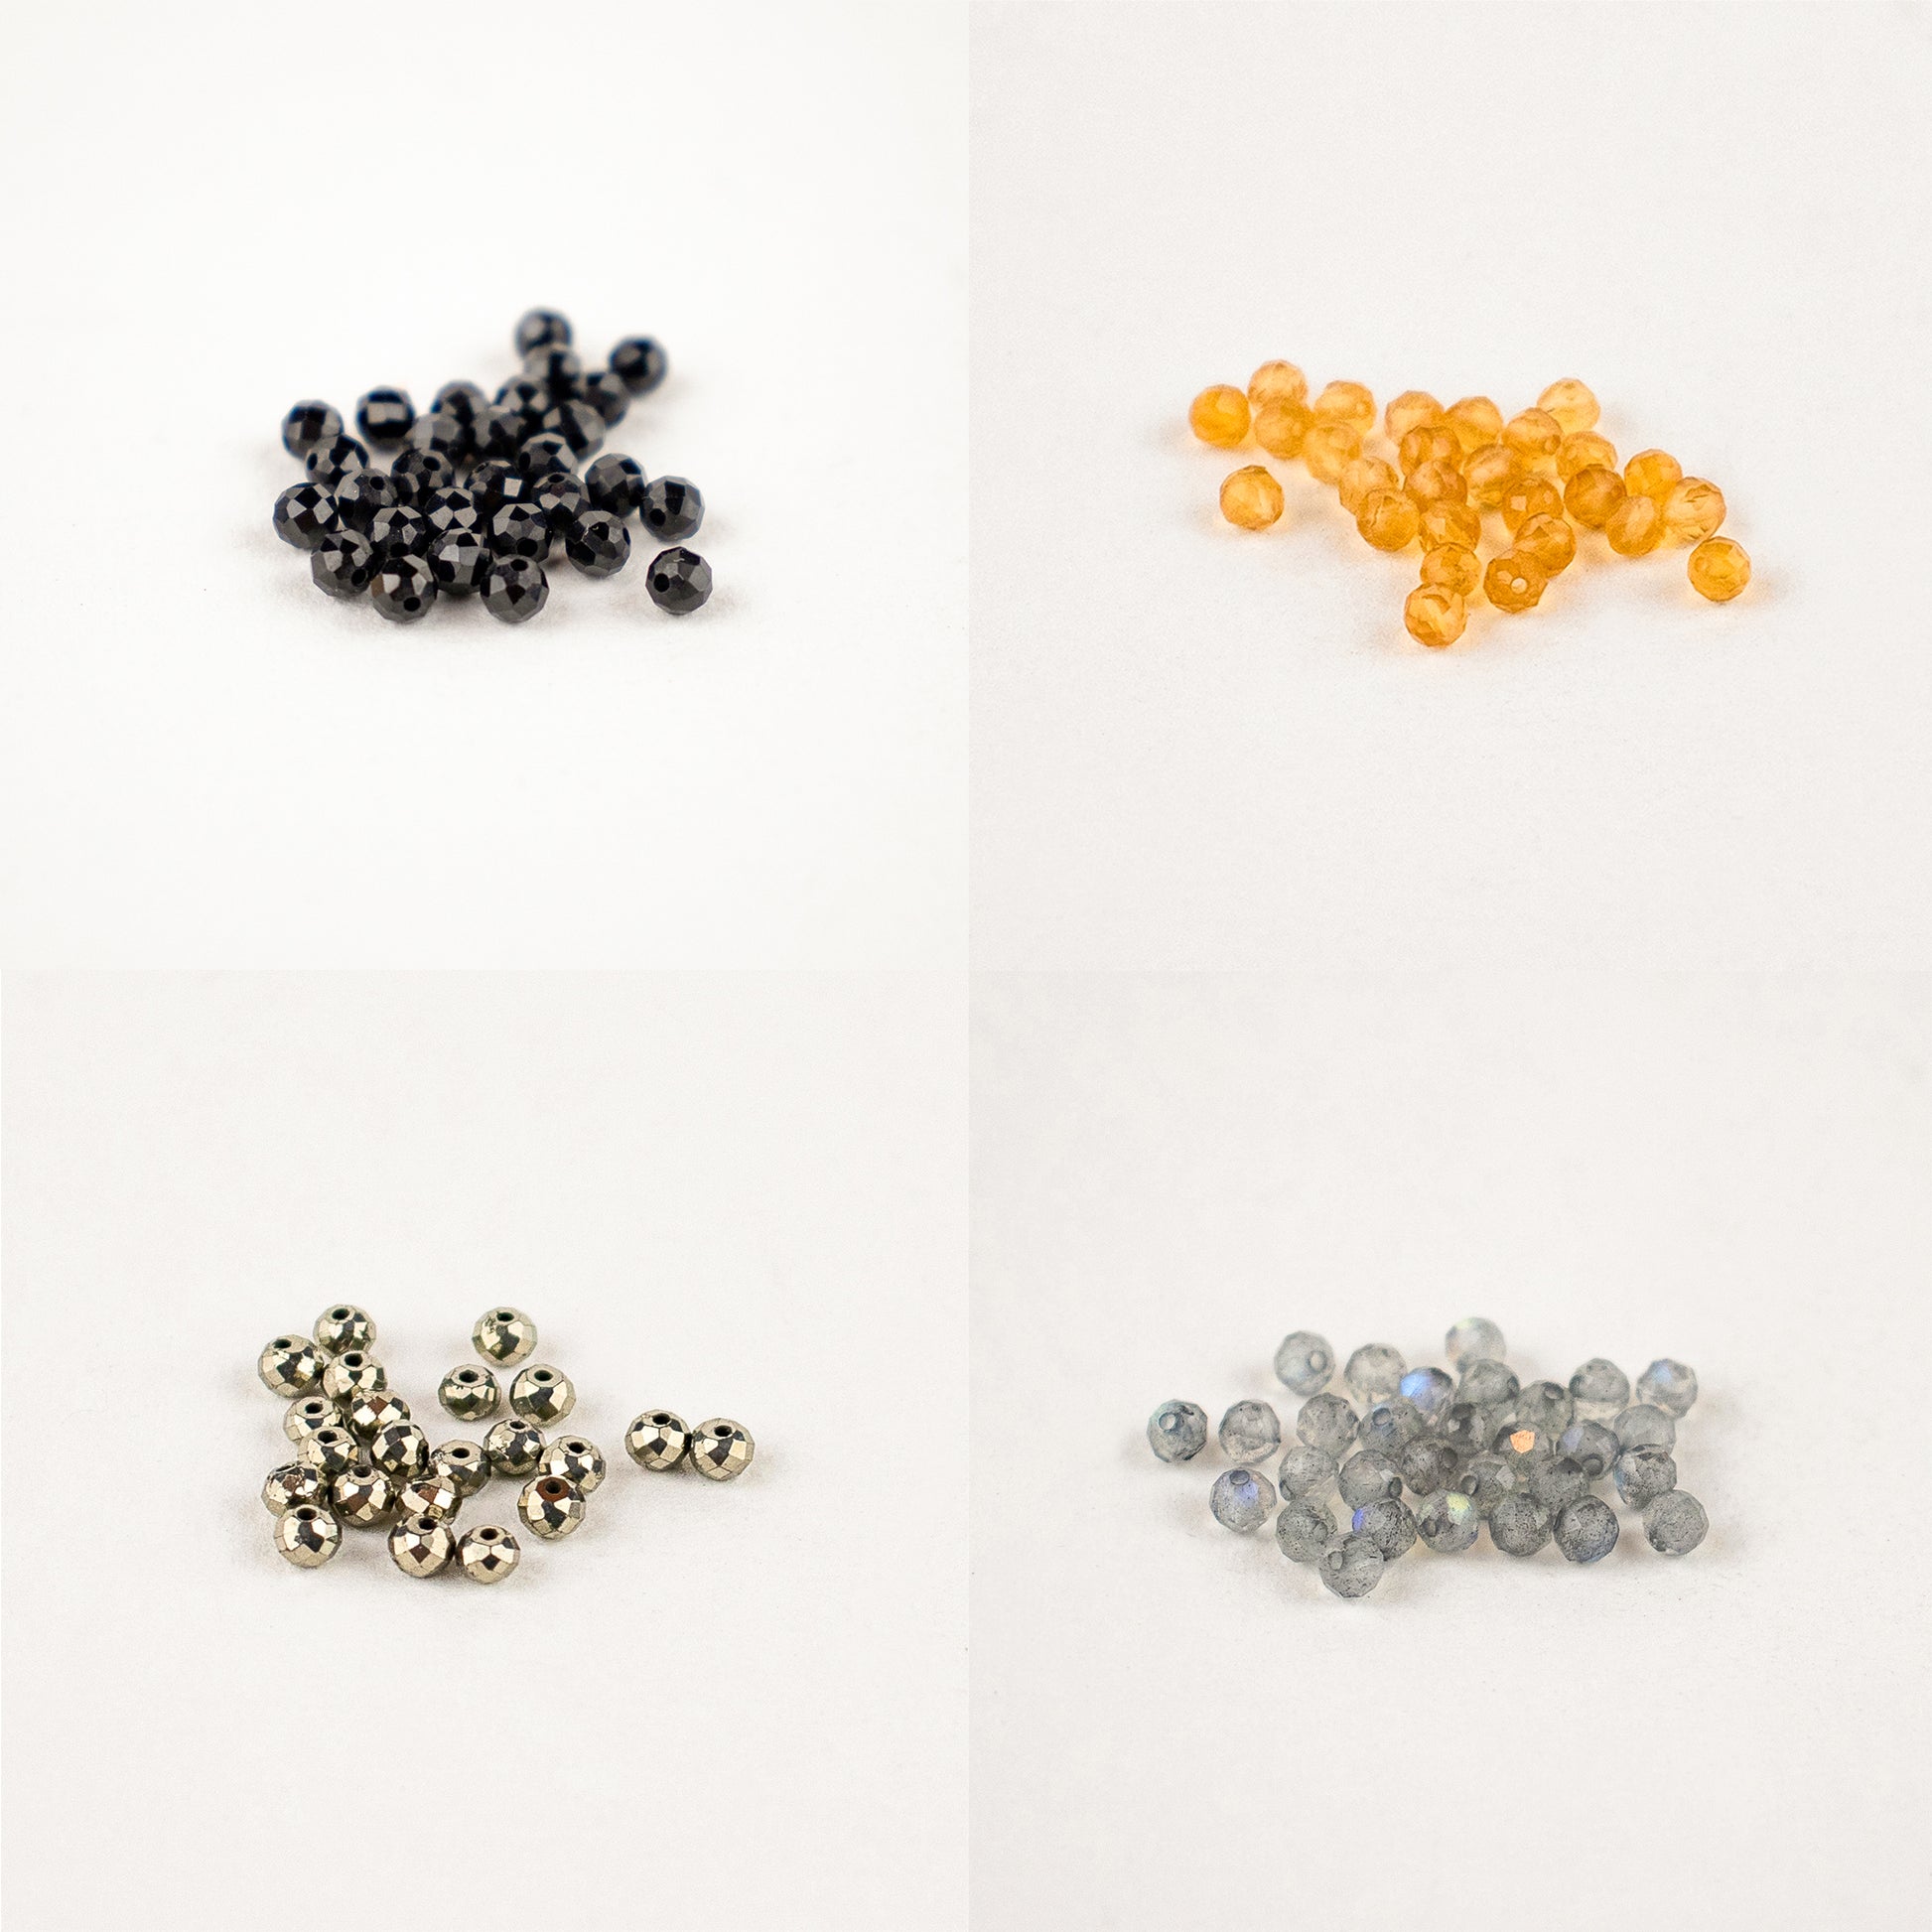 Onyx, citrine, pyrite, and labradorite beads.